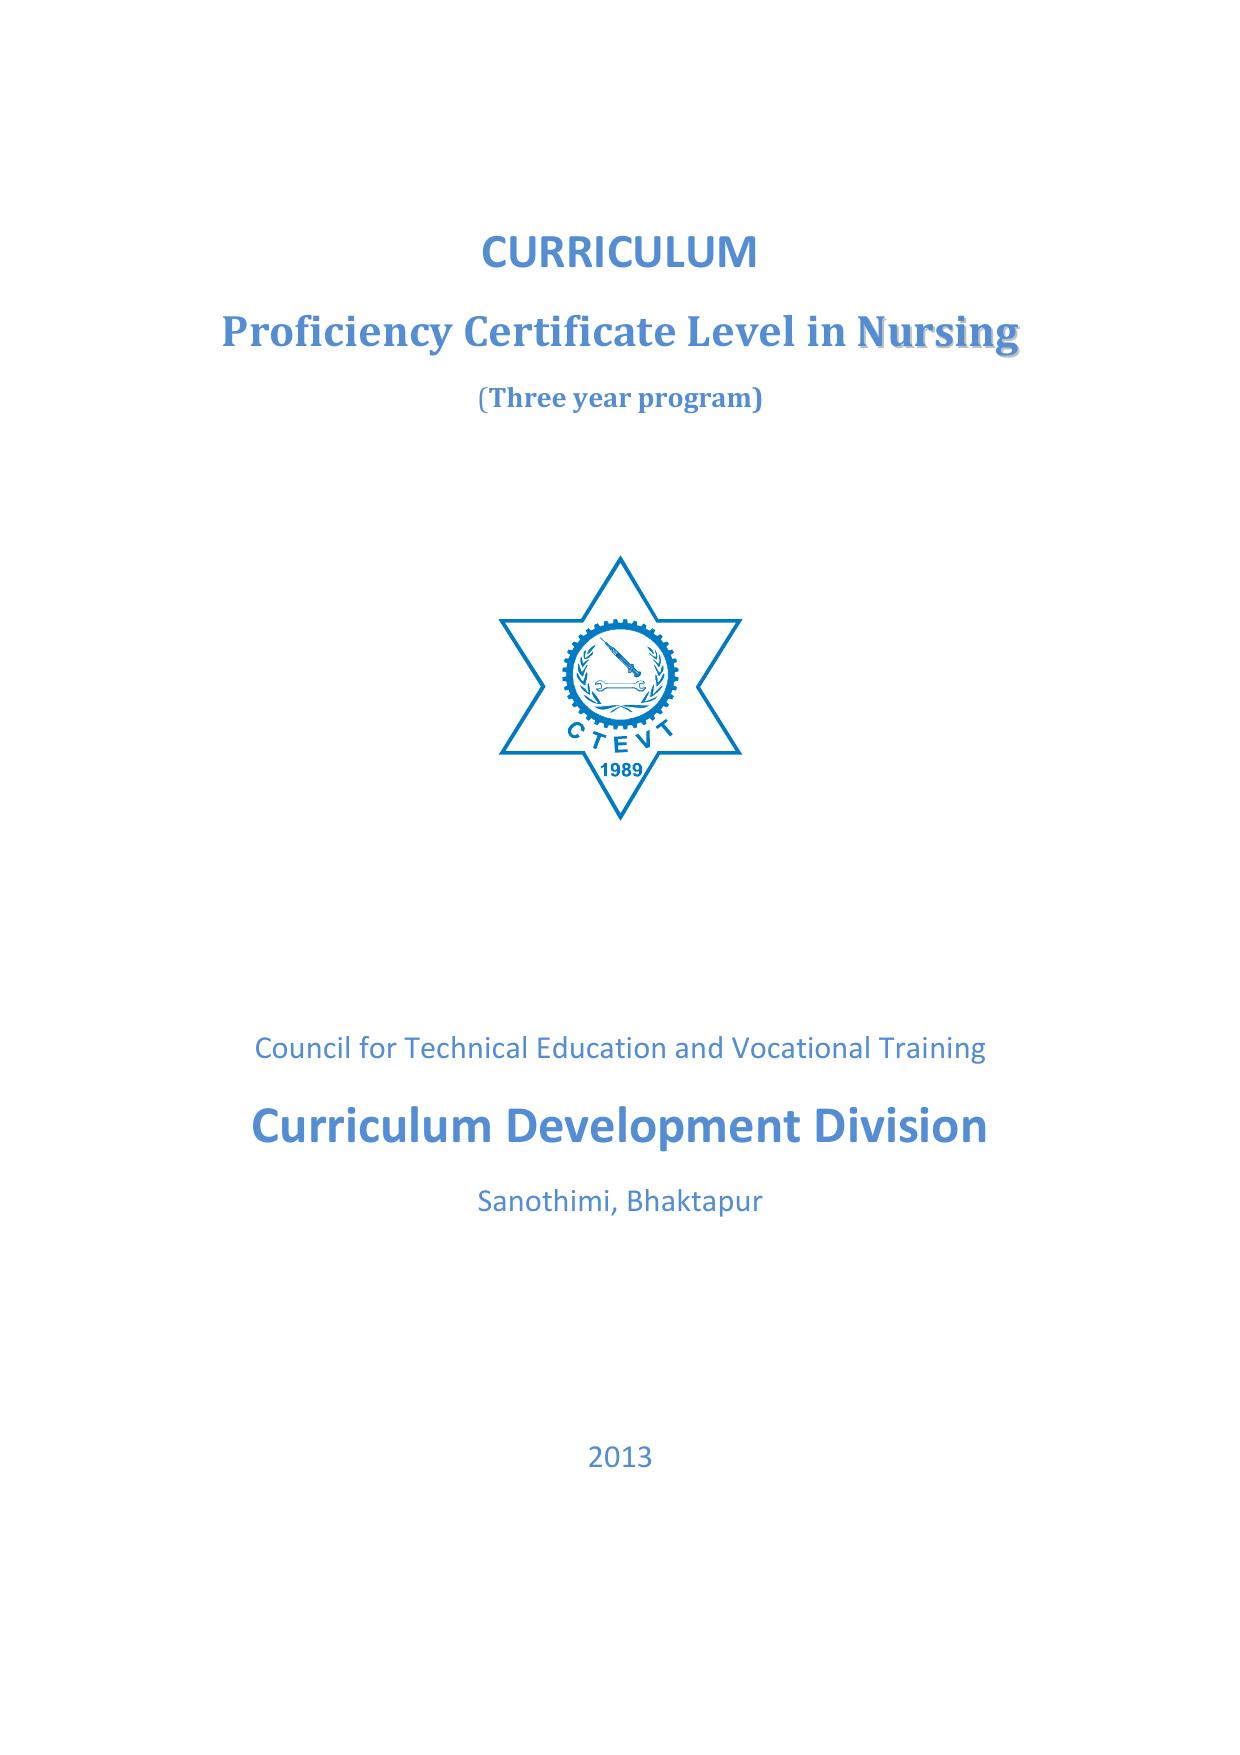 Proficiency Certificate Level in Nursing, 2013